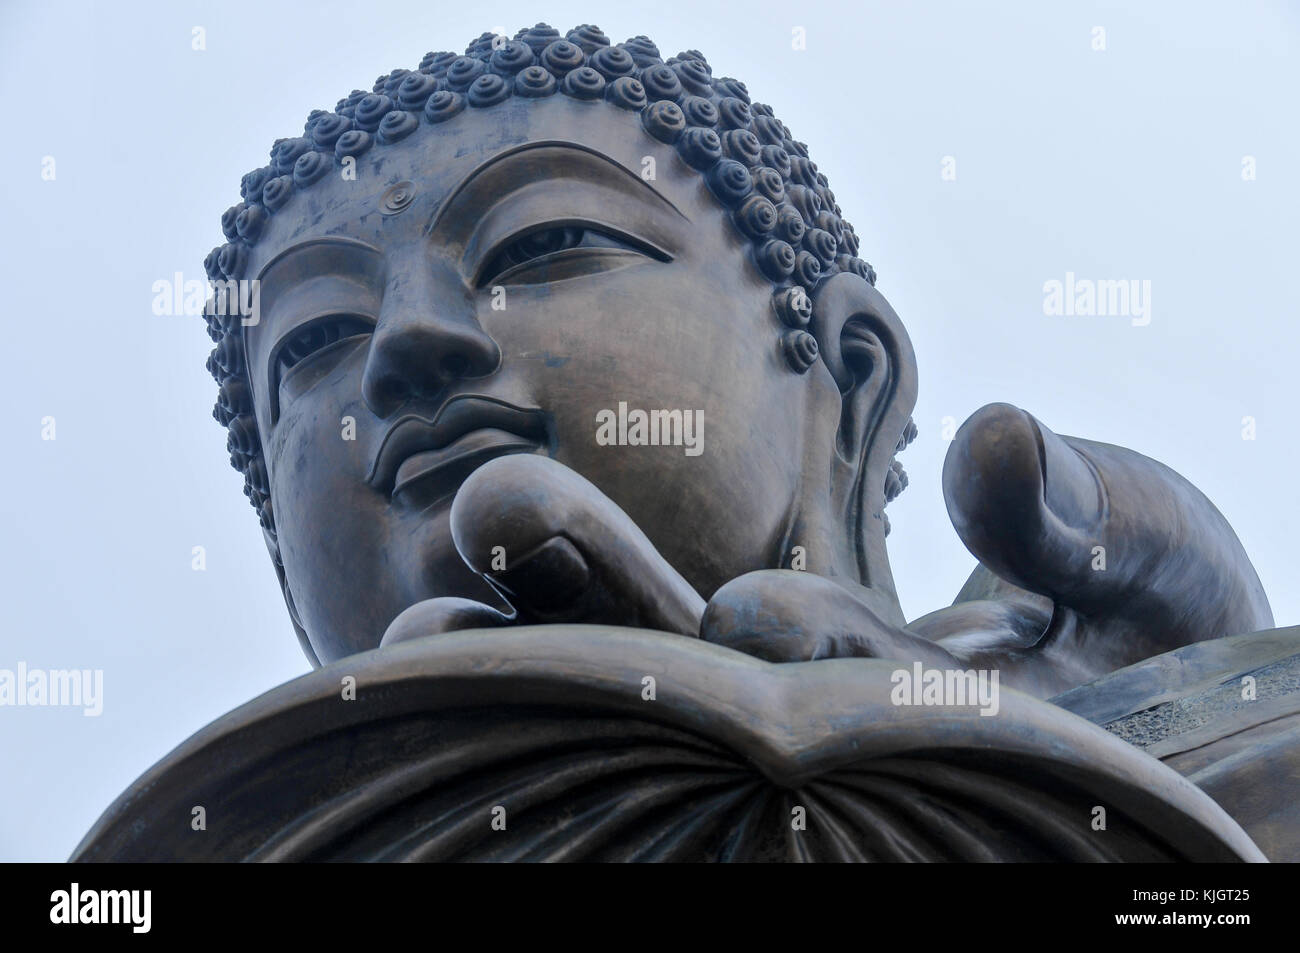 Tian Tan Buddha de hong kong enveloppée de brouillard. Banque D'Images